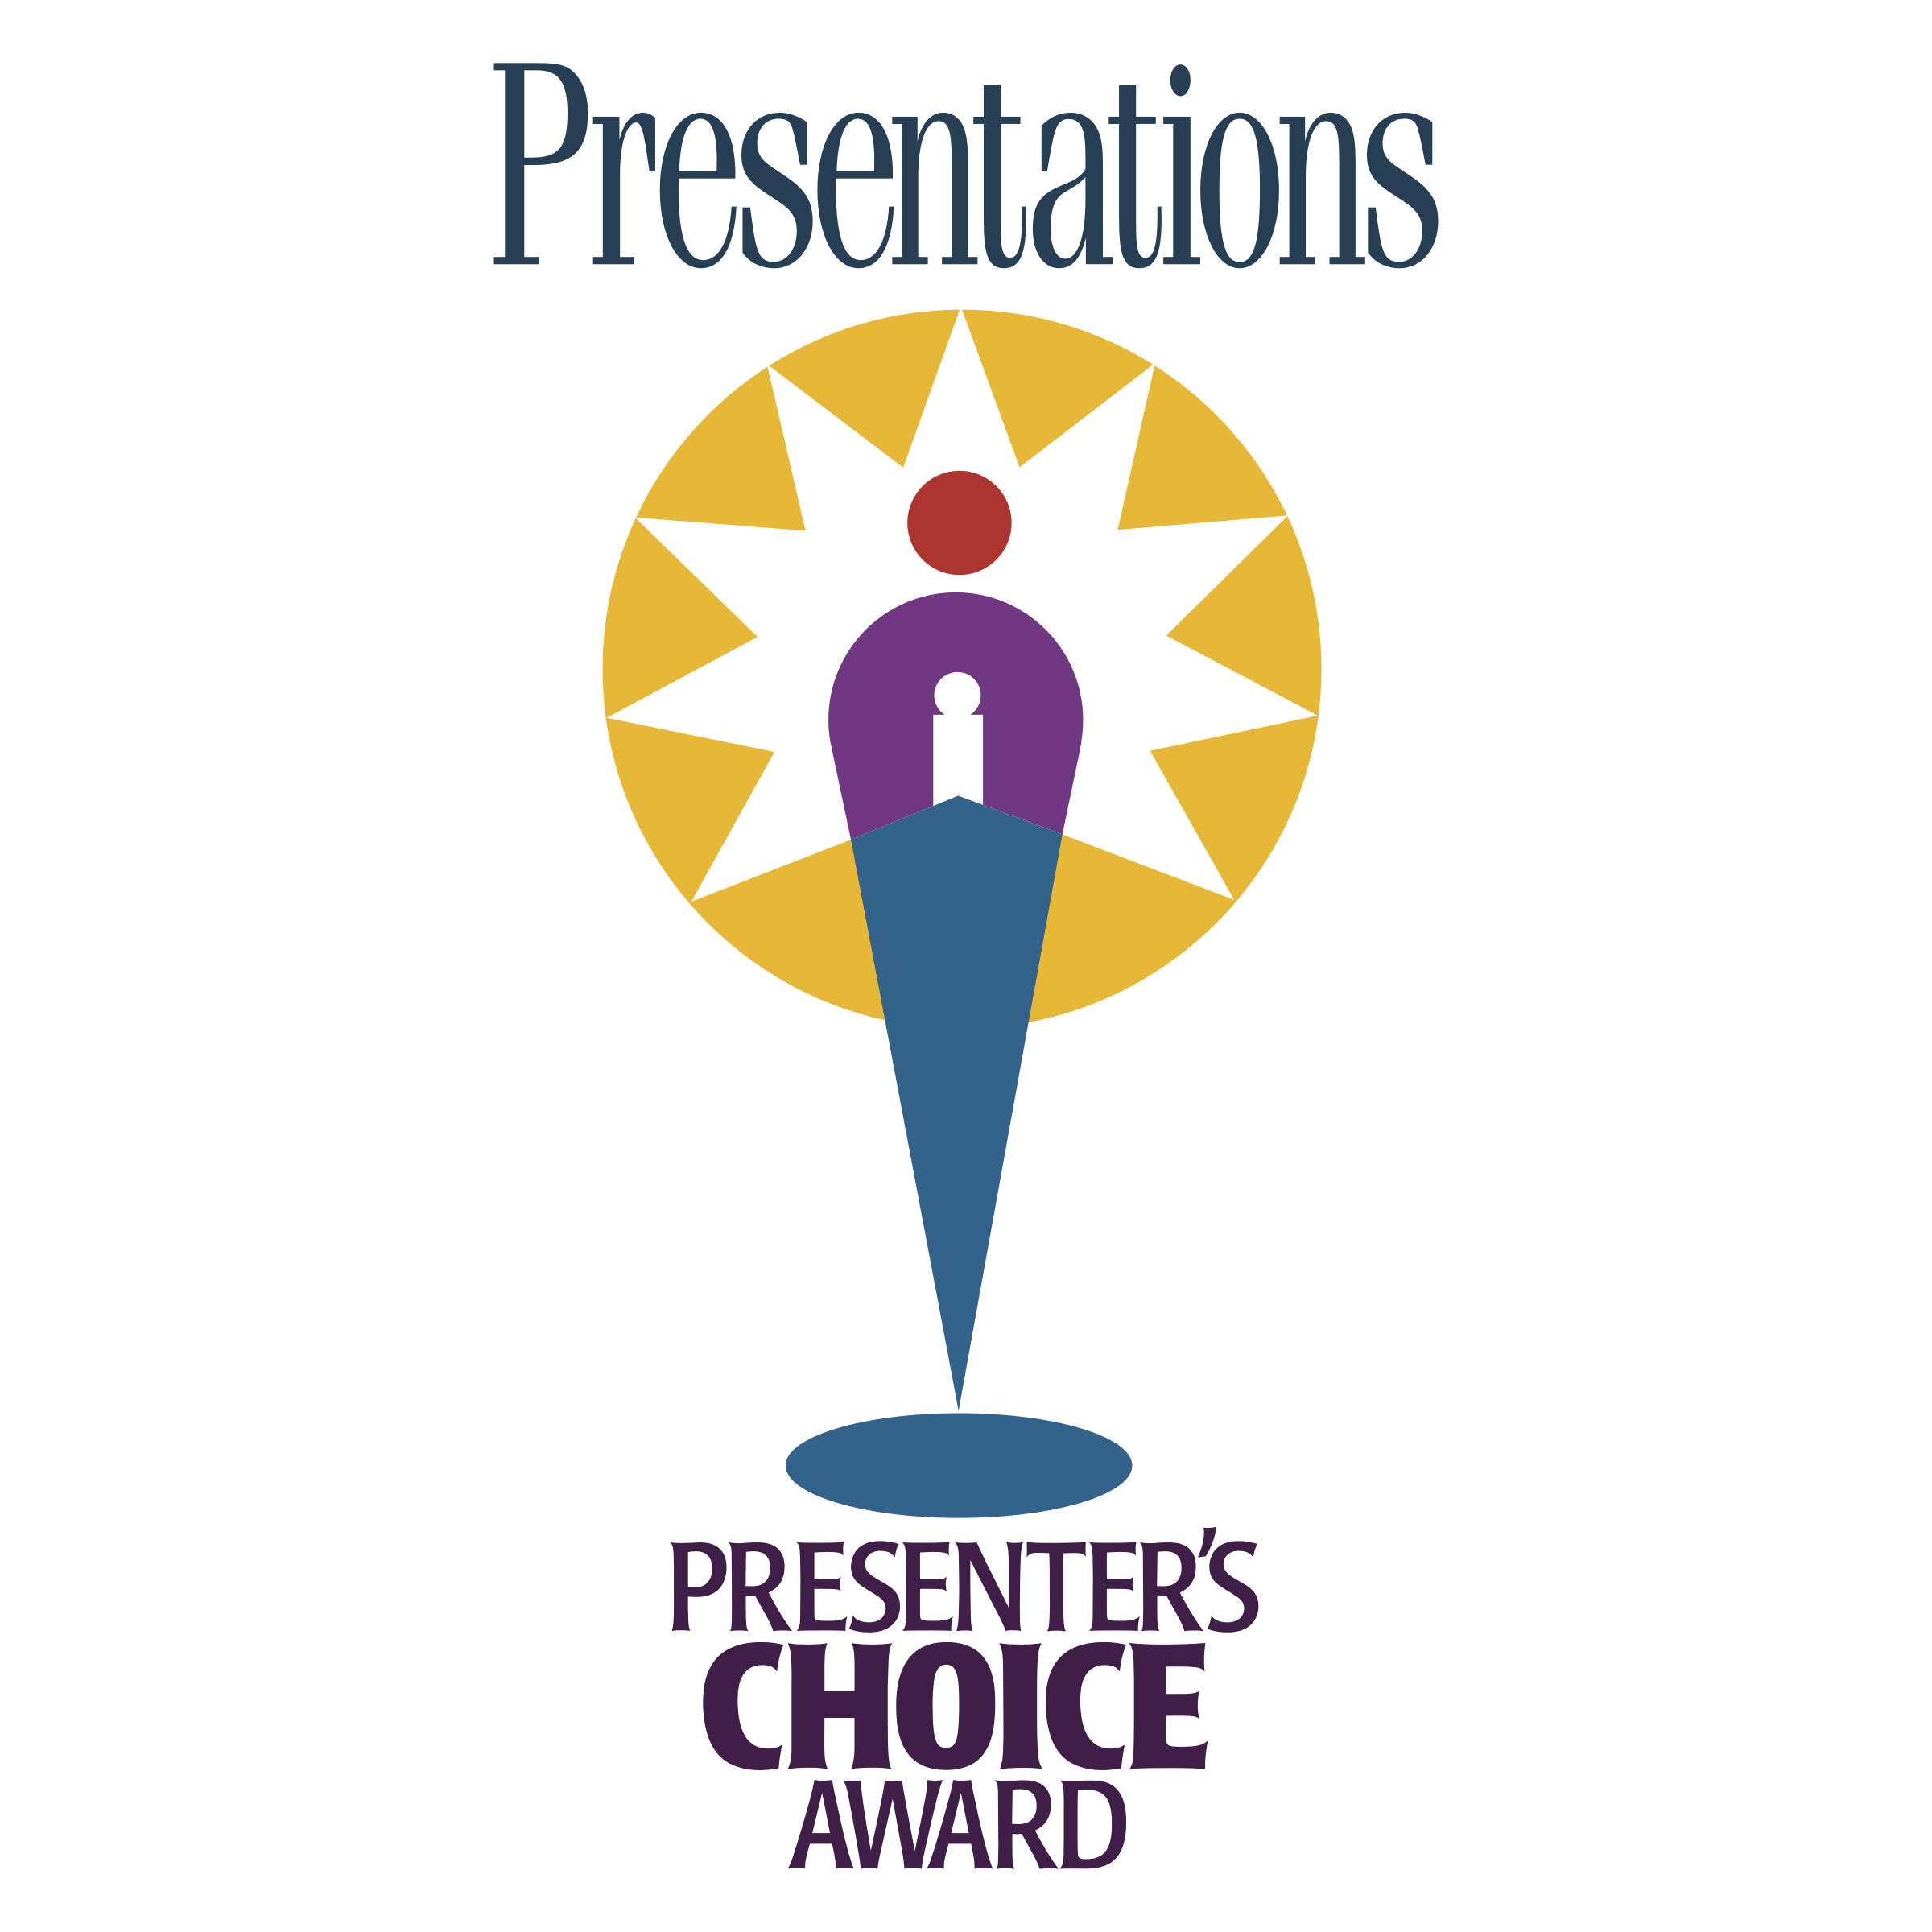 Presenter Logo - Presenter's Choice Award Logo PNG Transparent & SVG Vector - Freebie ...